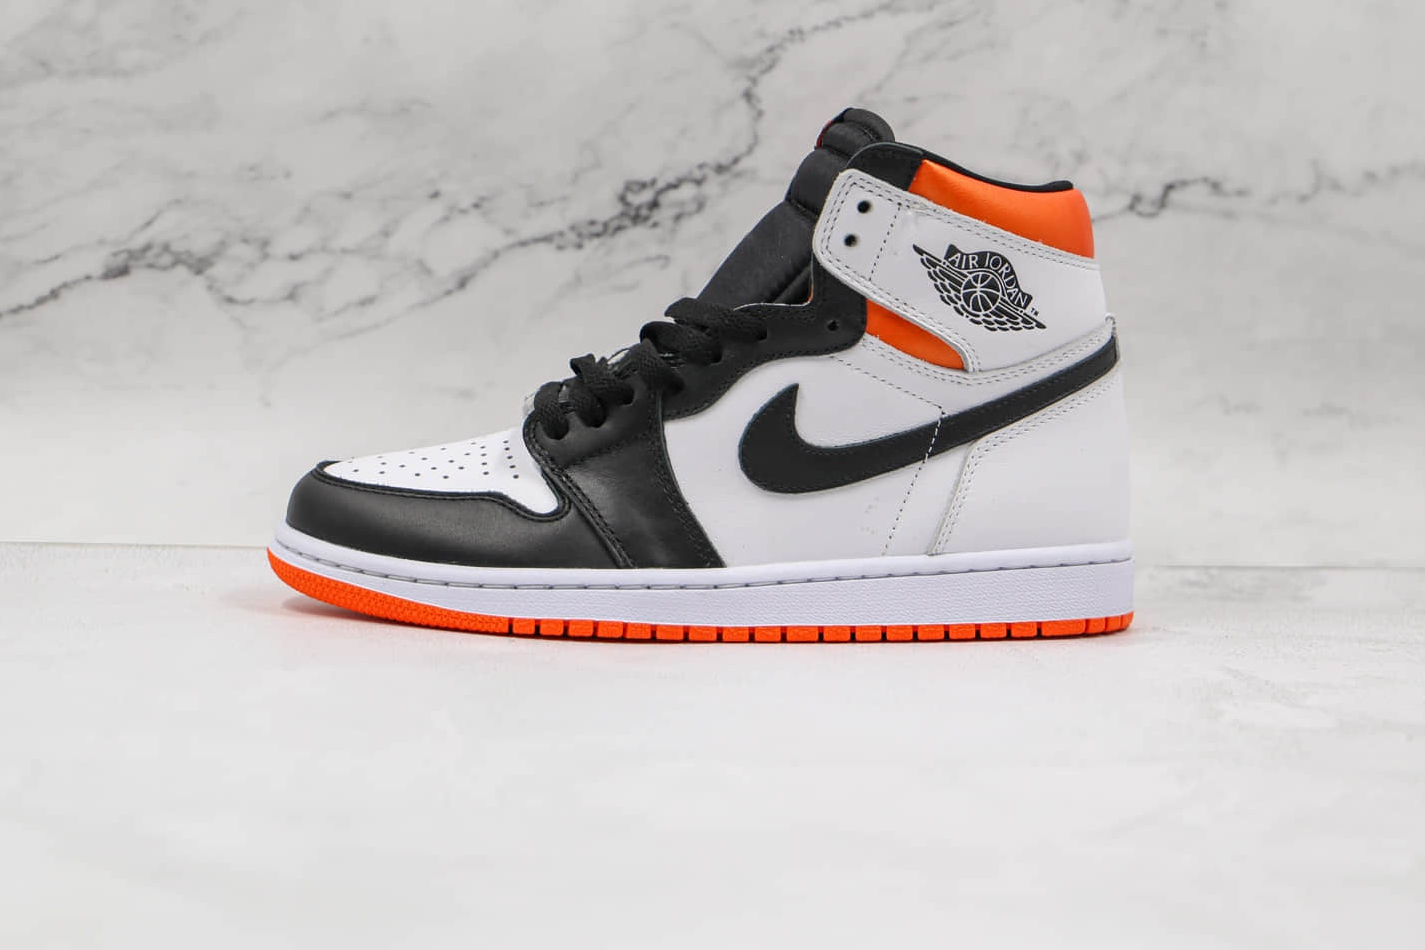 Air Jordan 1 Retro High OG 'Electro Orange' 555088-180 - Exclusive Sneaker Release